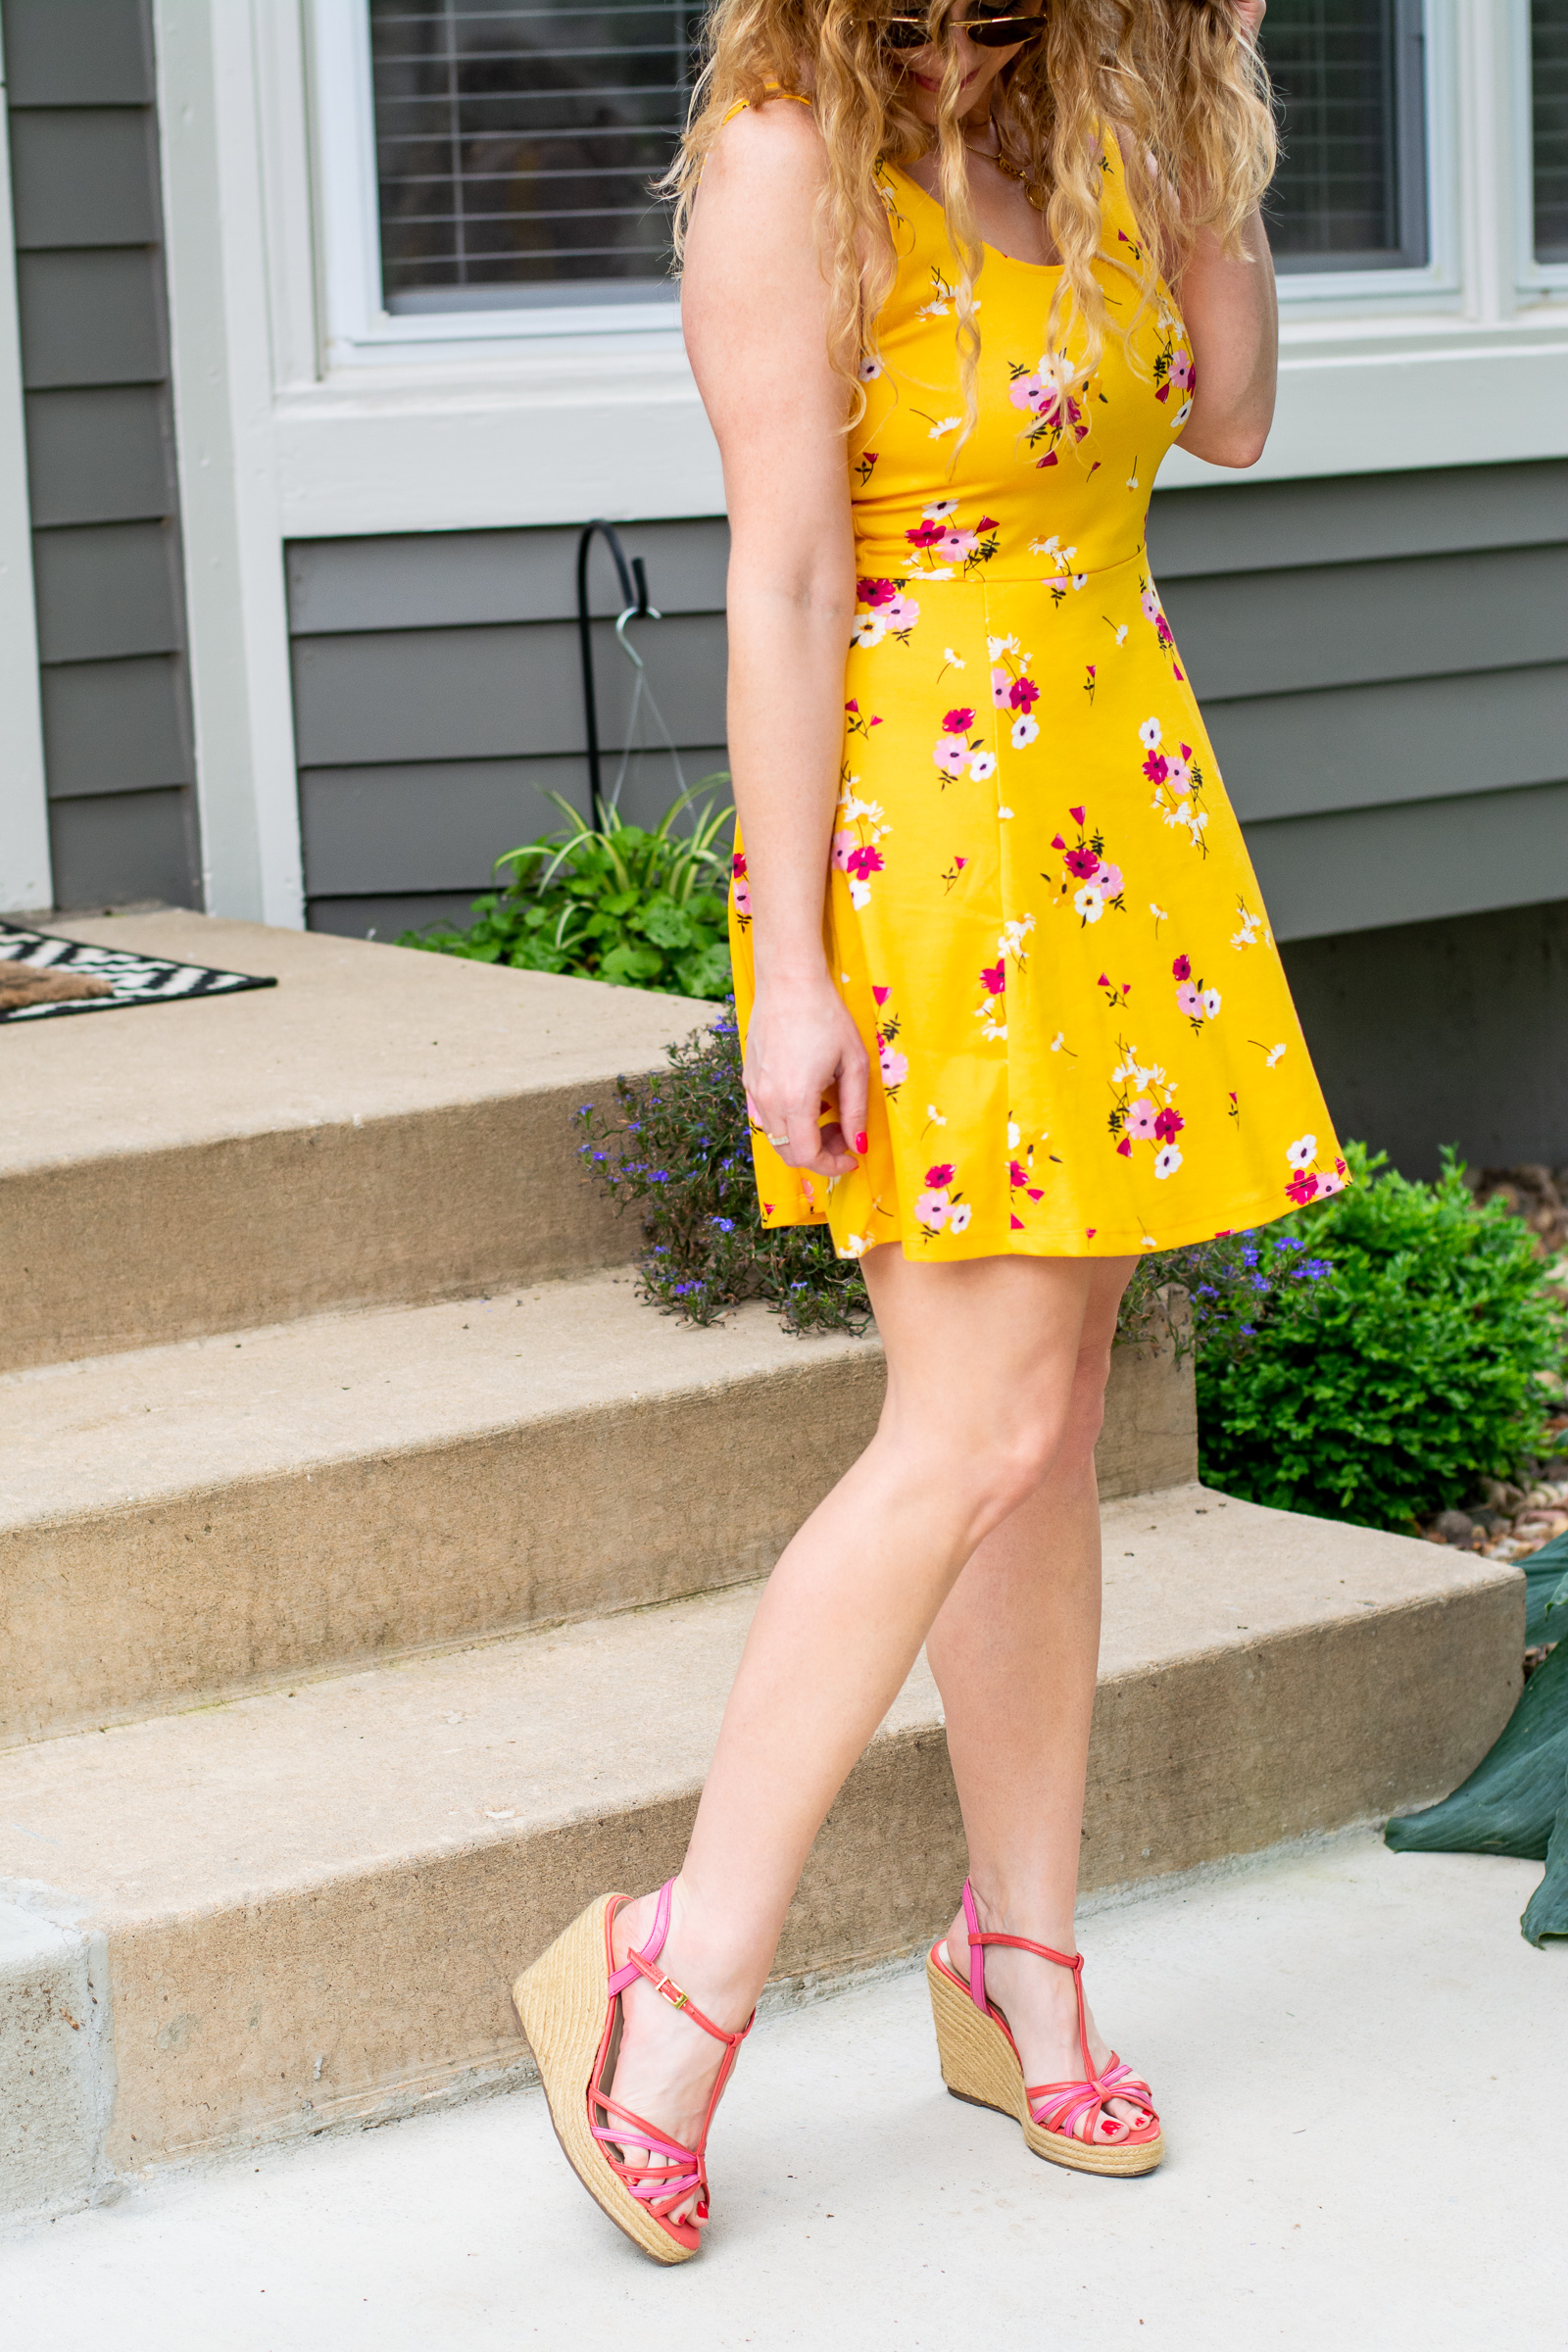 Summer OOTD: Yellow Floral Skater Dress + Wedges. | LSR